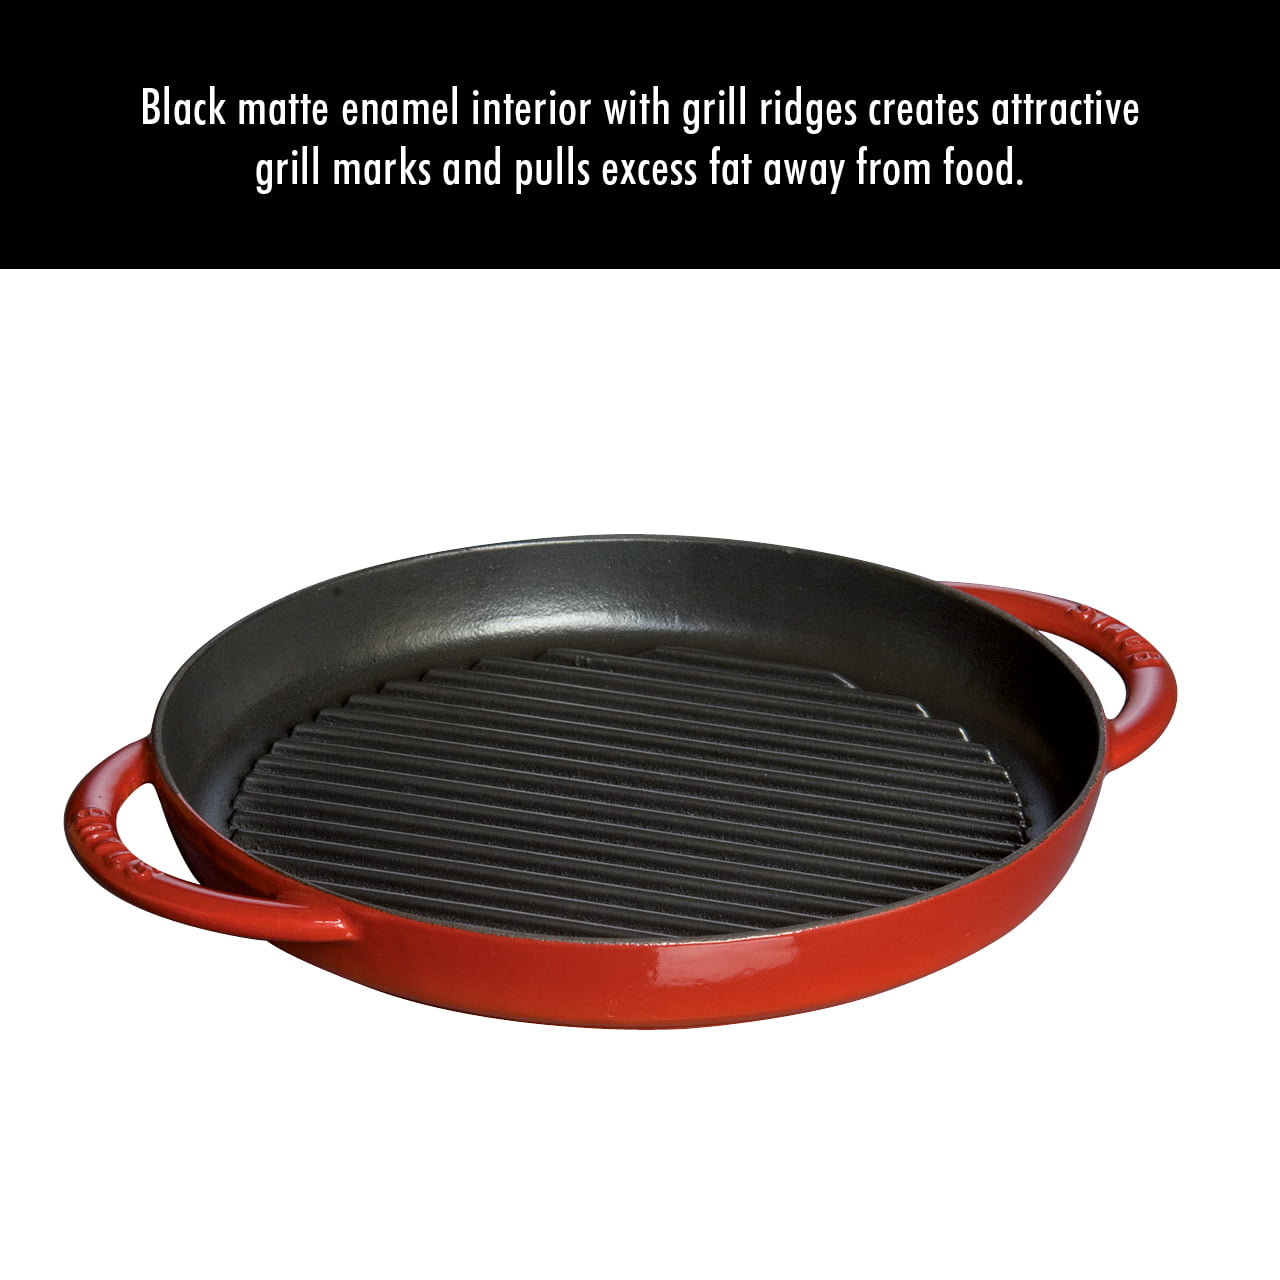 Pan Staub Cast Iron Grill round 30 cm, Black 40511-521-0 for sale